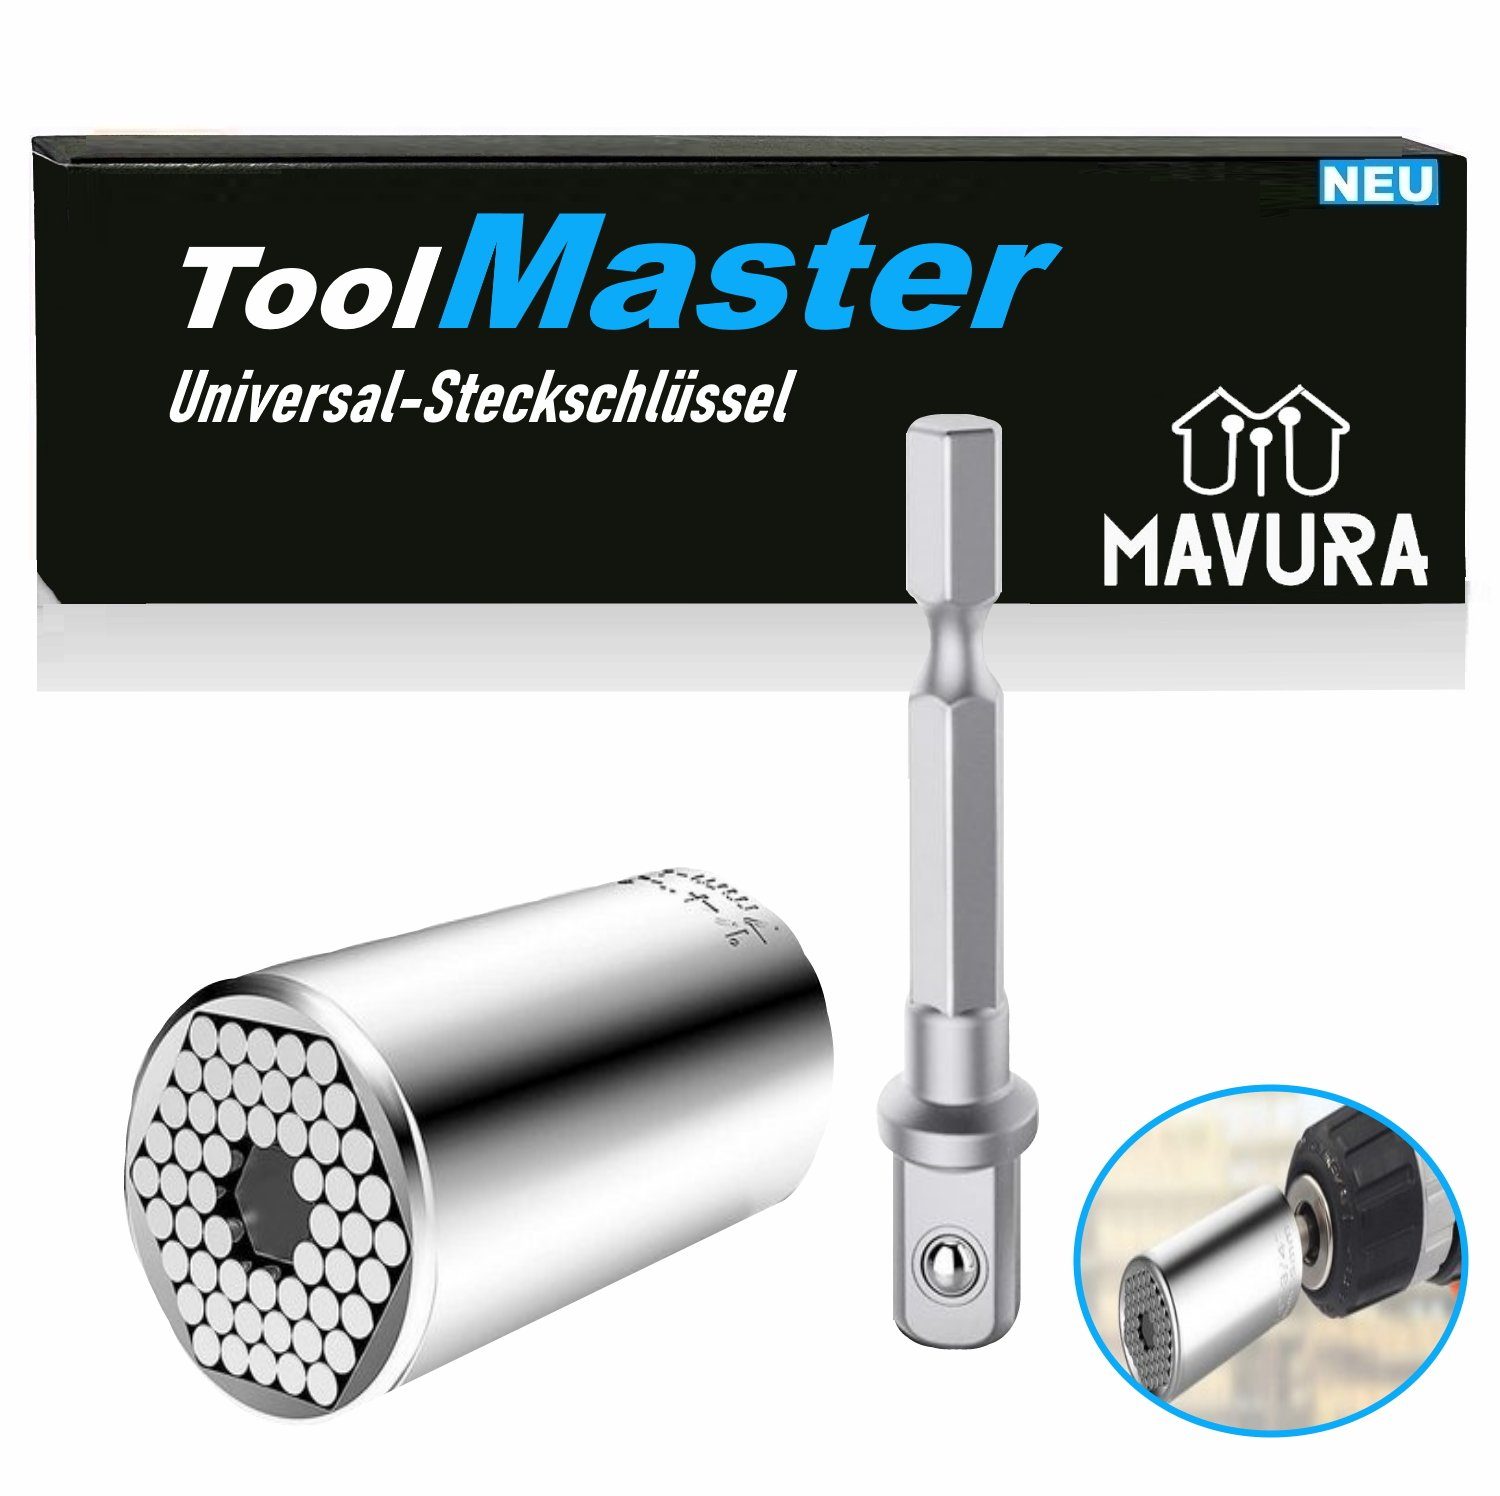 MAVURA Steckschlüssel ToolMaster Universal Multifunktions Nuss Multi Tool Steckschlüssel, Universalschlüssel Universalnuss Handwerkzeug 7-19mm + Adapter